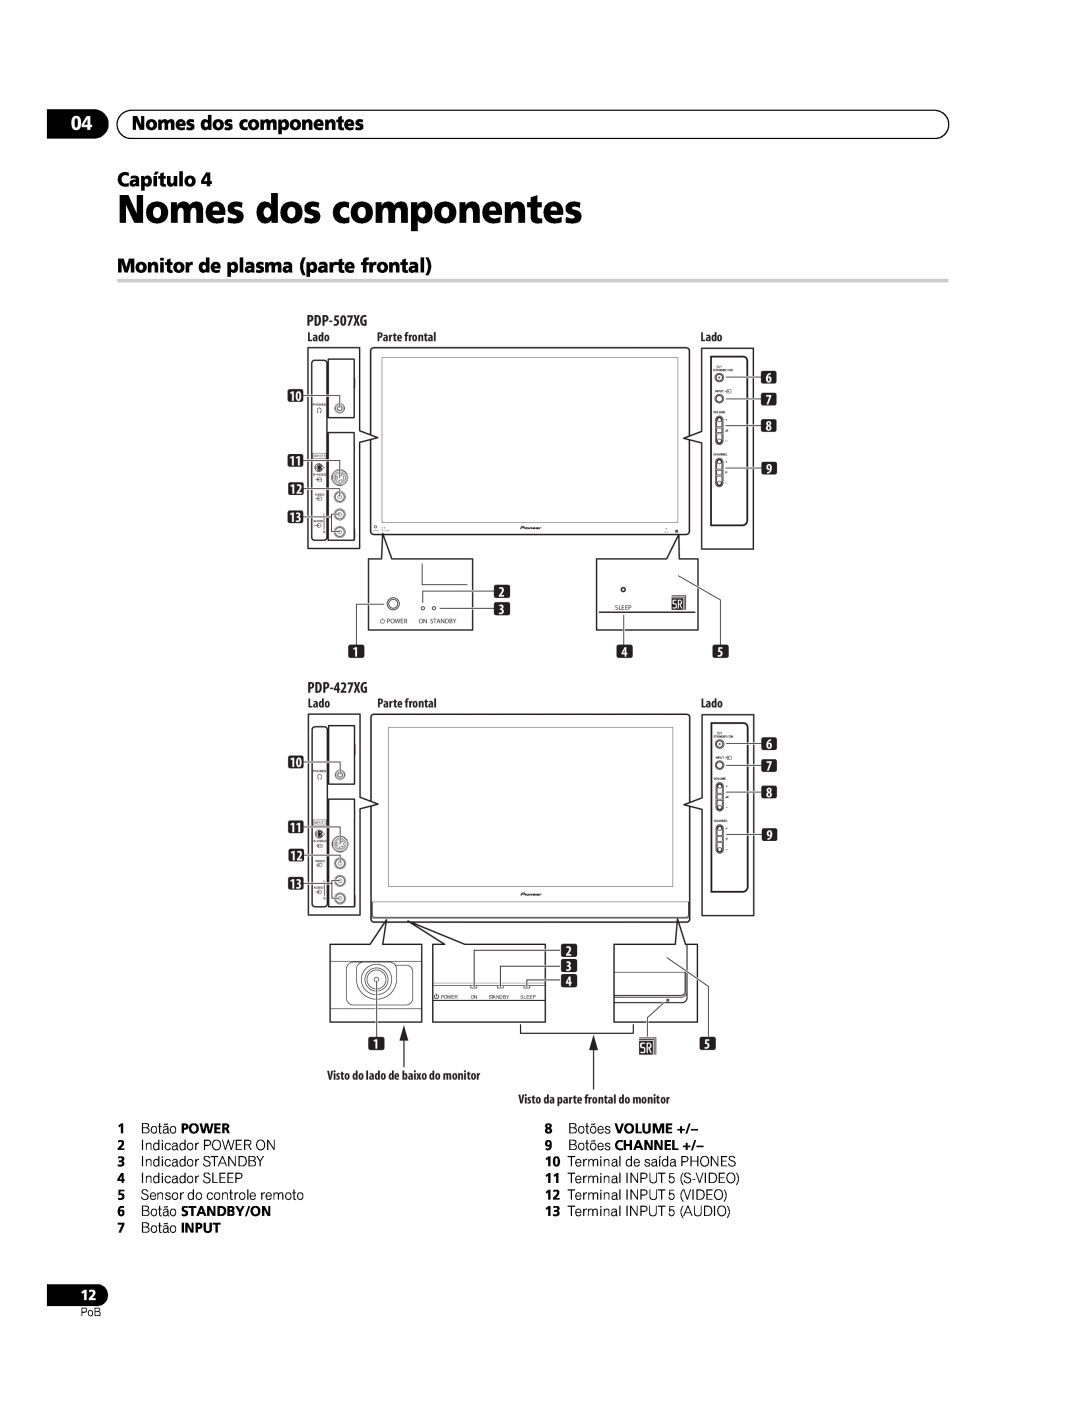 Pioneer PDP-427XG manual Nomes dos componentes Capítulo, Monitor de plasma parte frontal, PDP-507XG 